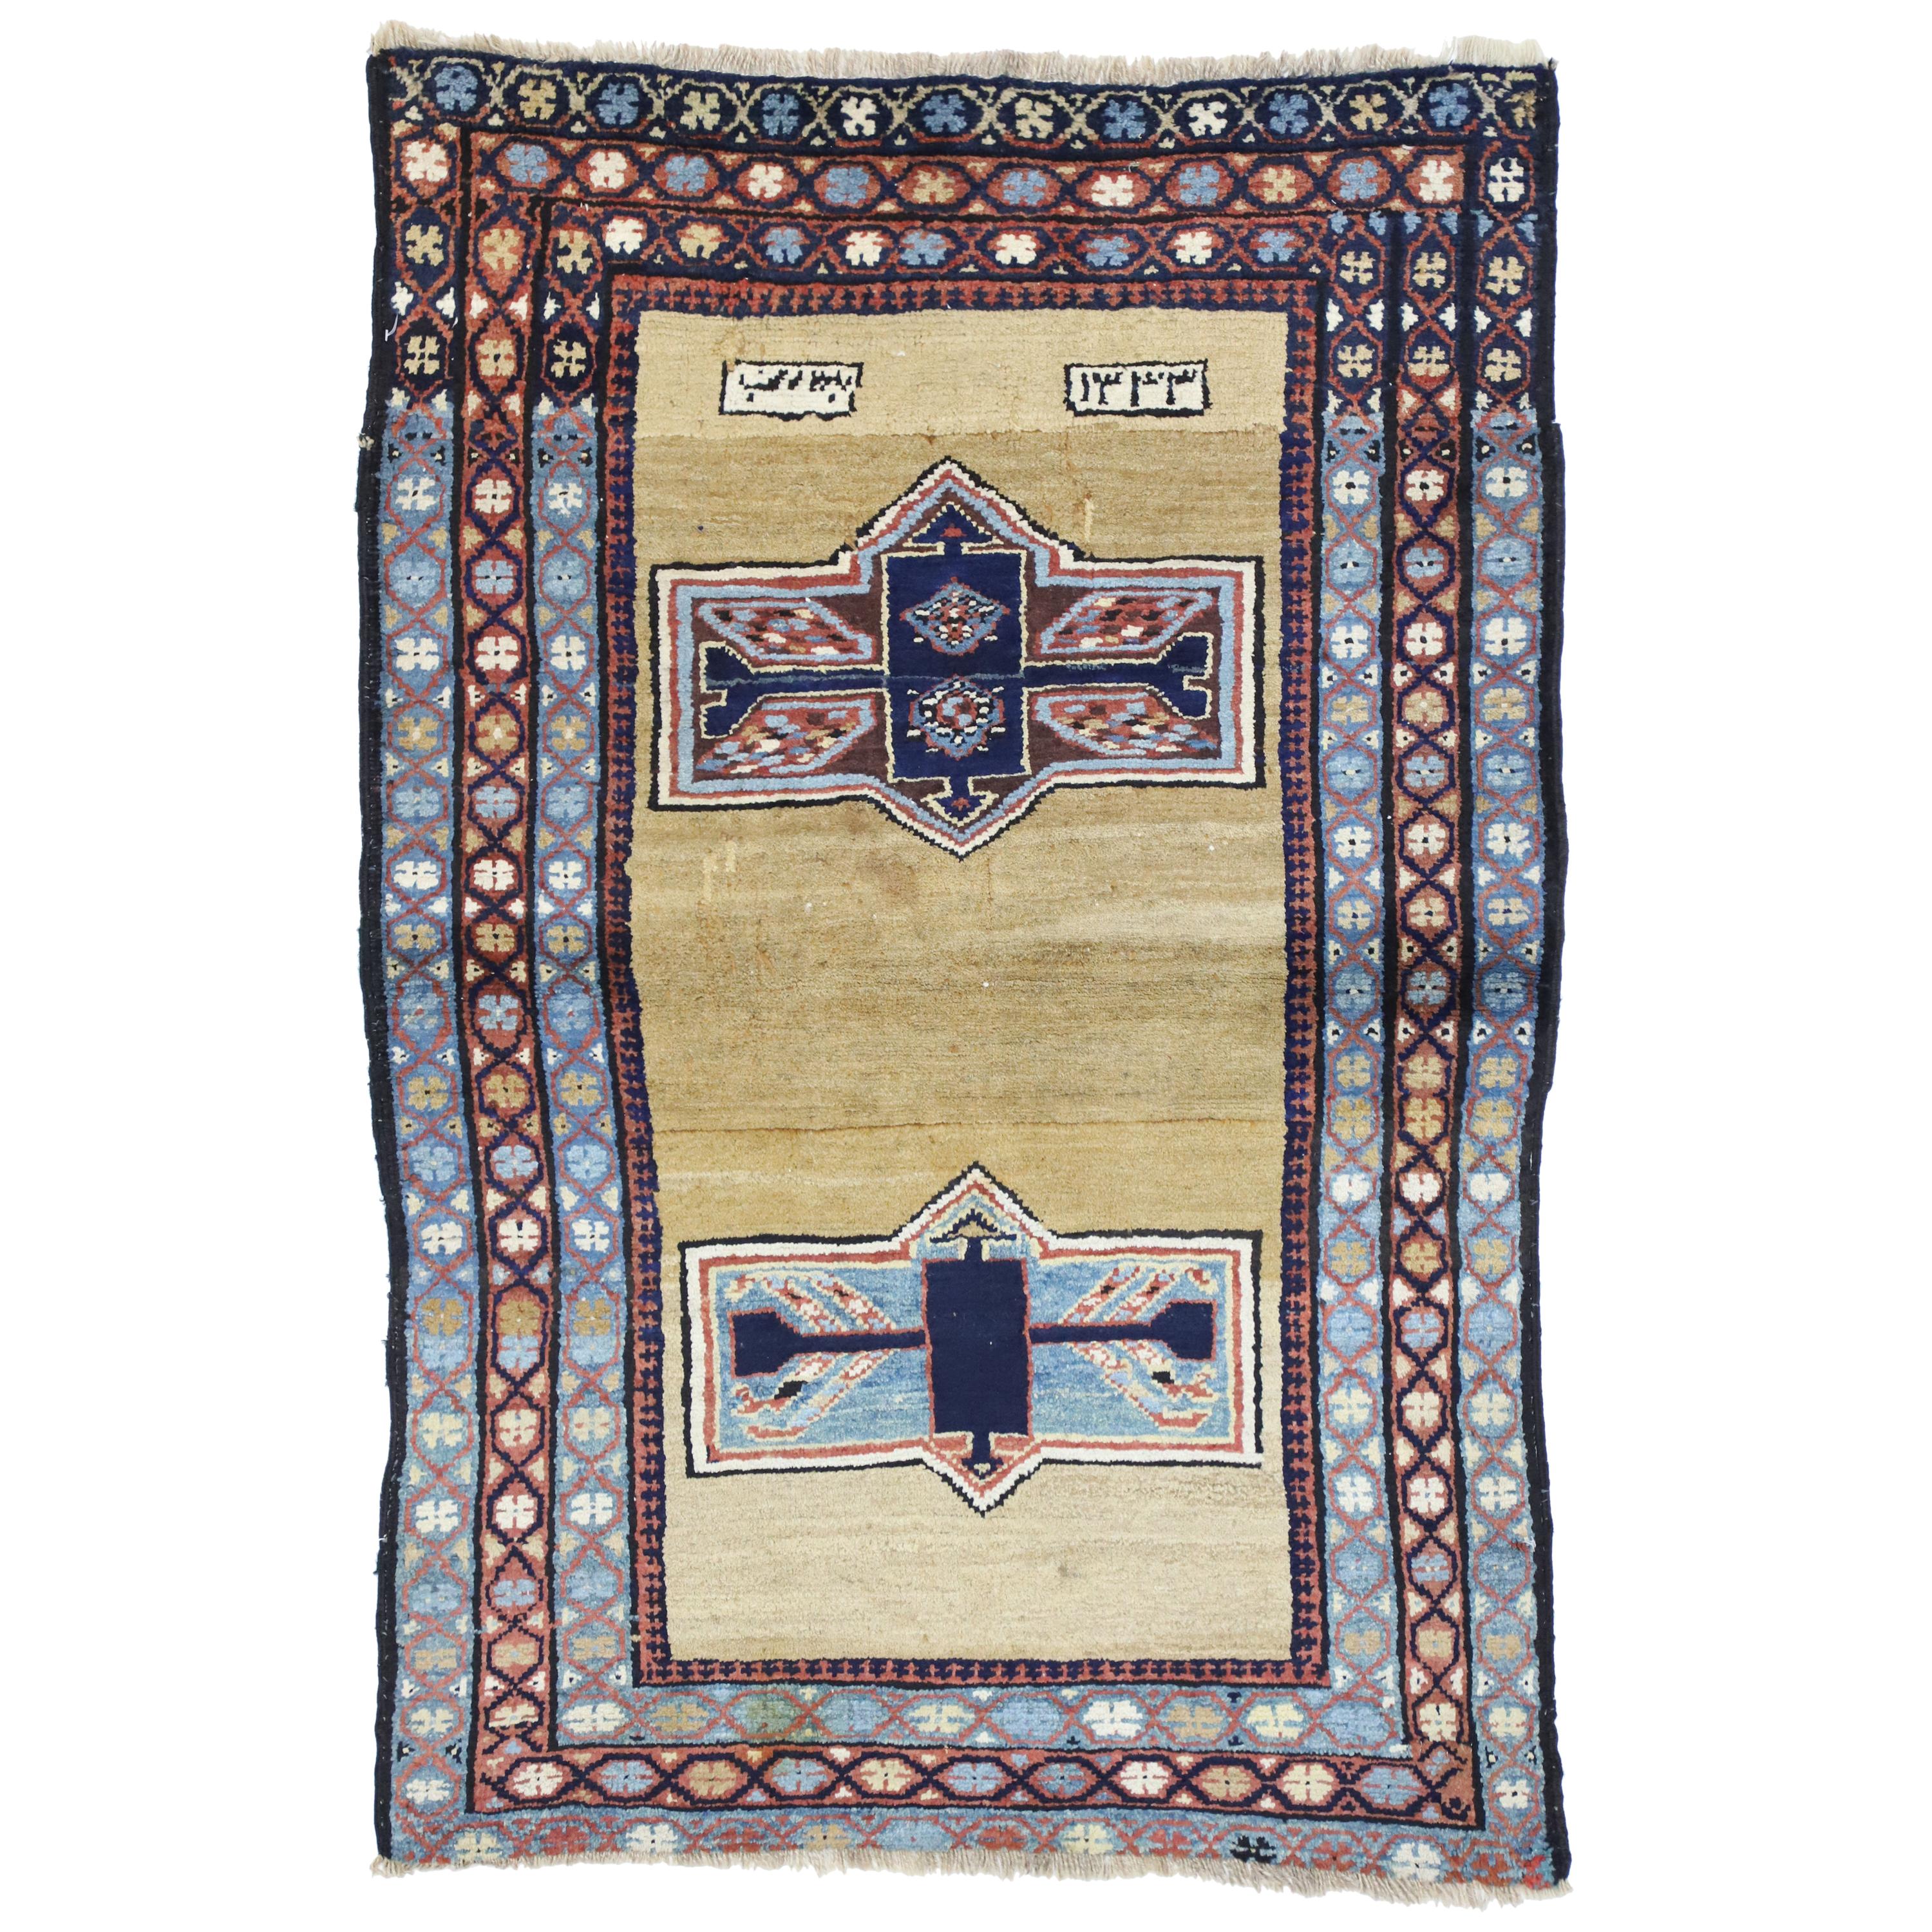 Tapis persan ancien d'Azerbaïdjan avec motif tribal, style moderne du milieu du siècle dernier en vente